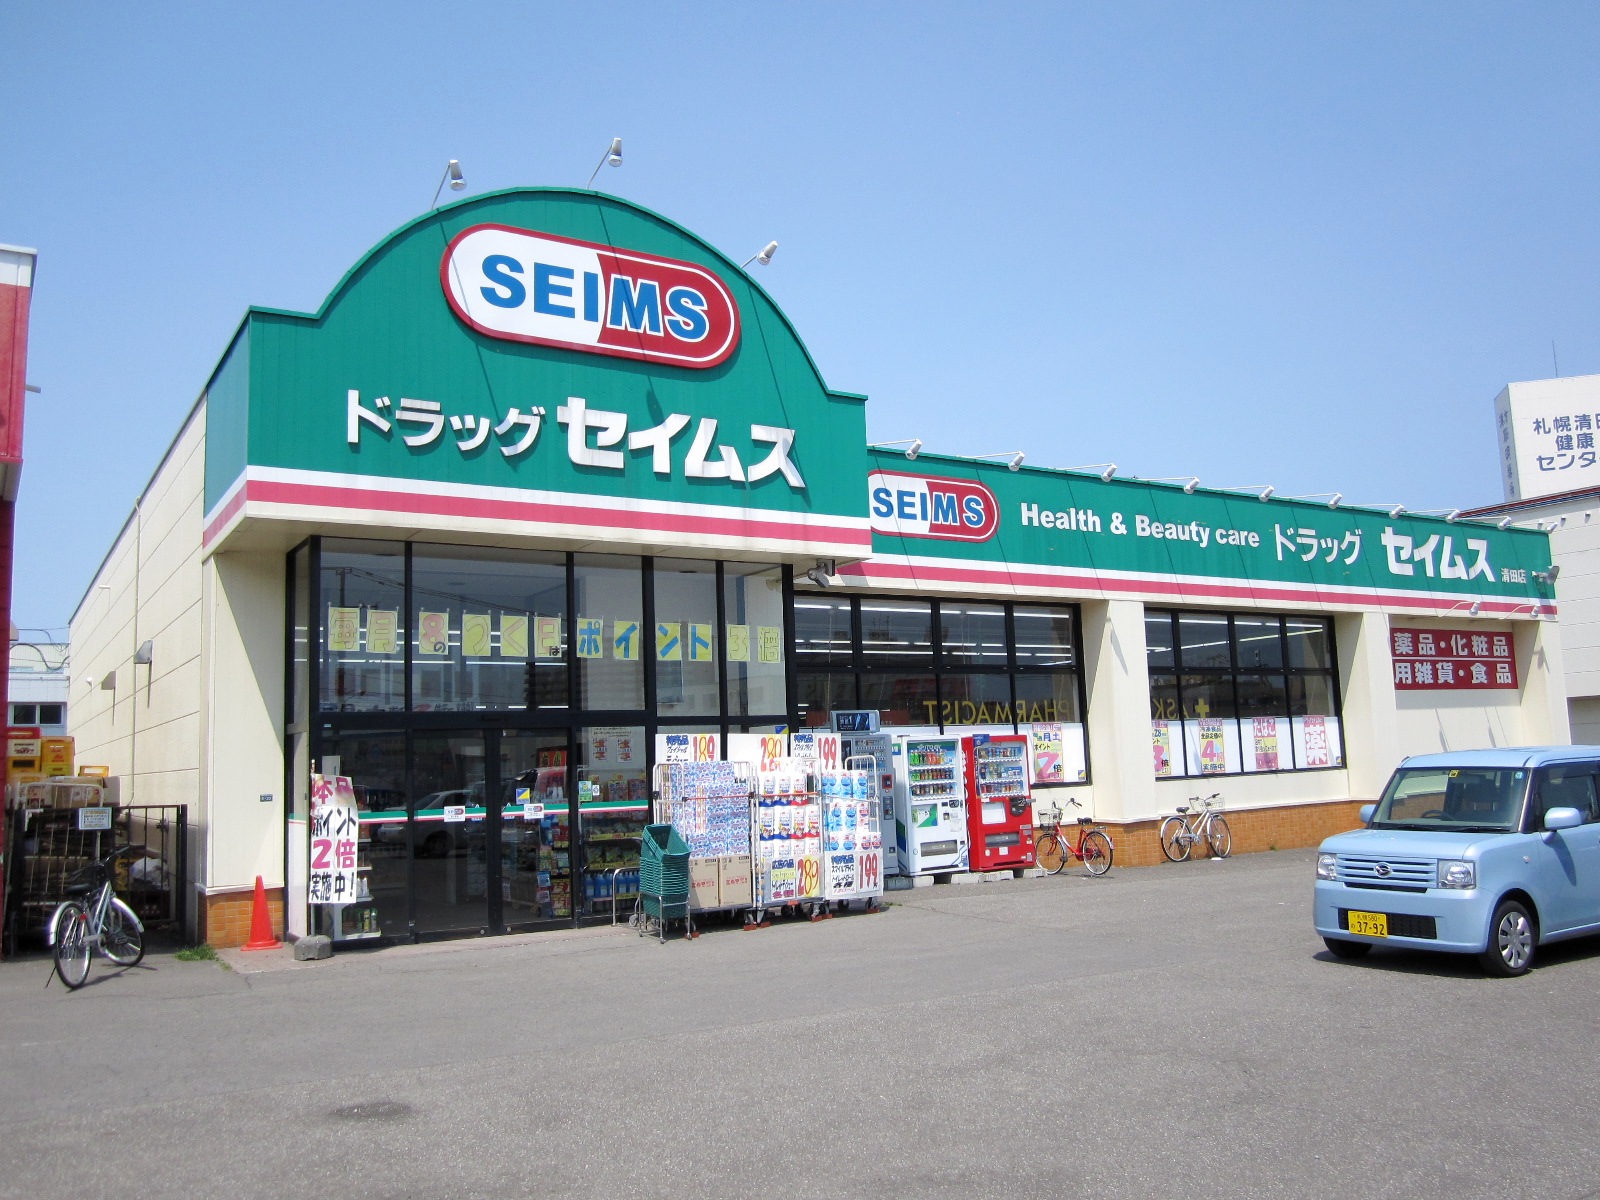 Dorakkusutoa. Drag Seimusu Kiyota store 1139m until (drugstore)